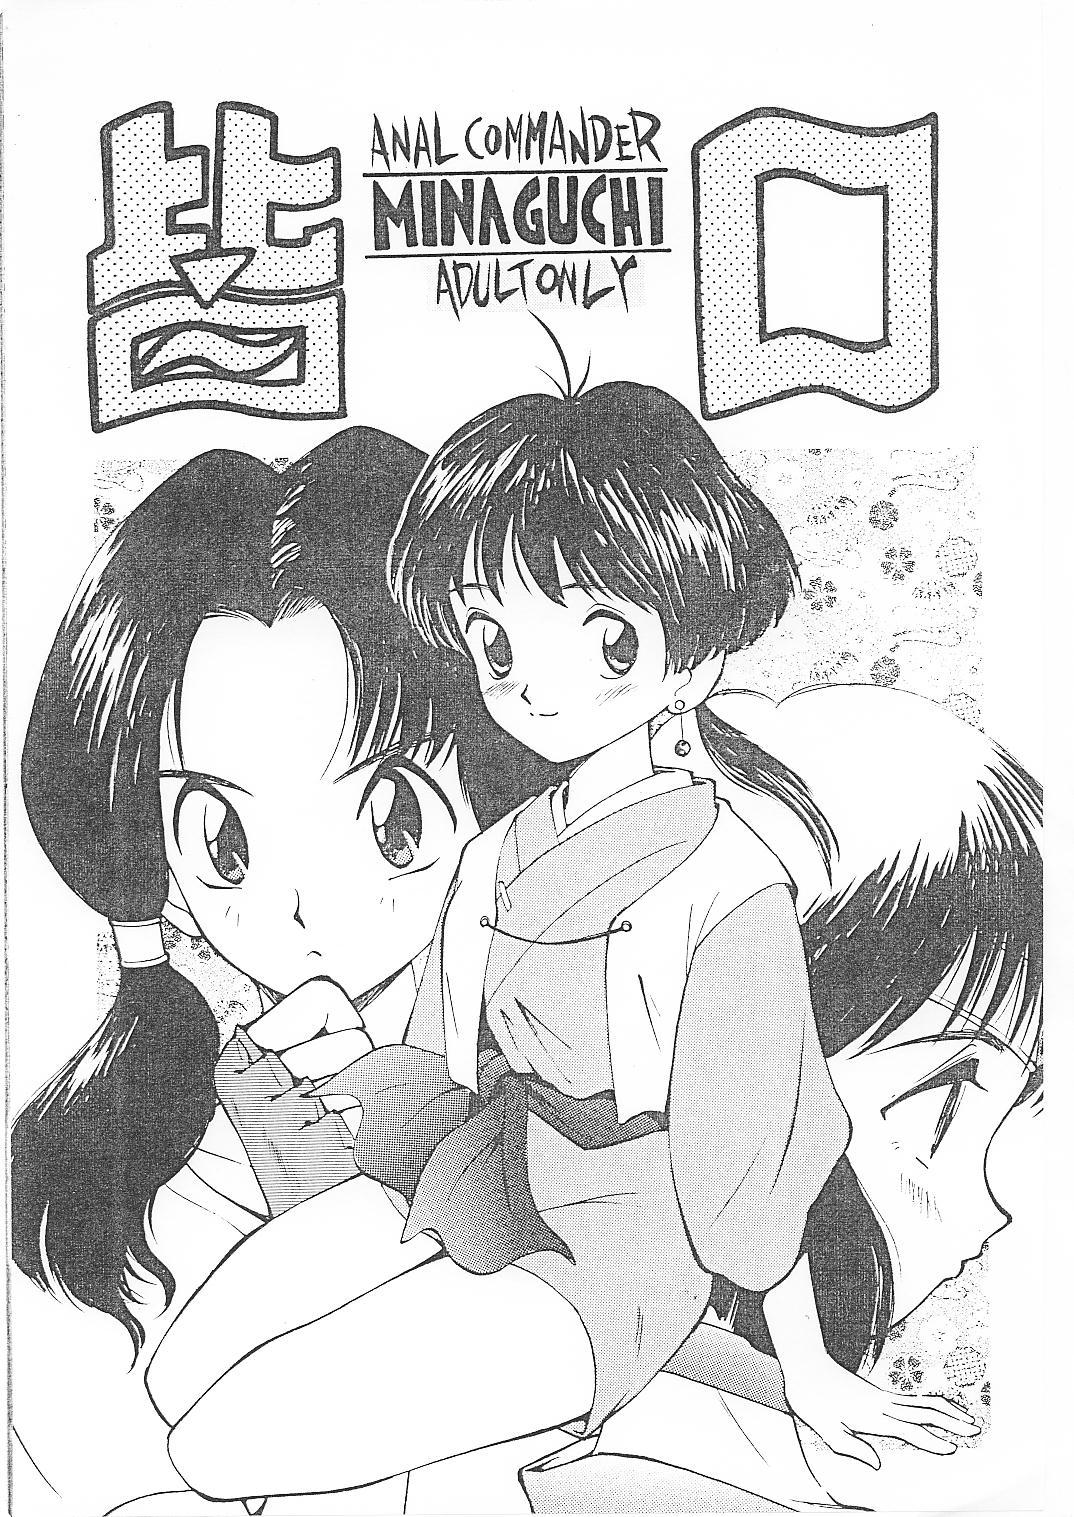 Titten Minaguchi - Anal Commander Minaguchi - Sailor moon Dragon ball z Final fantasy Sextoy - Page 1